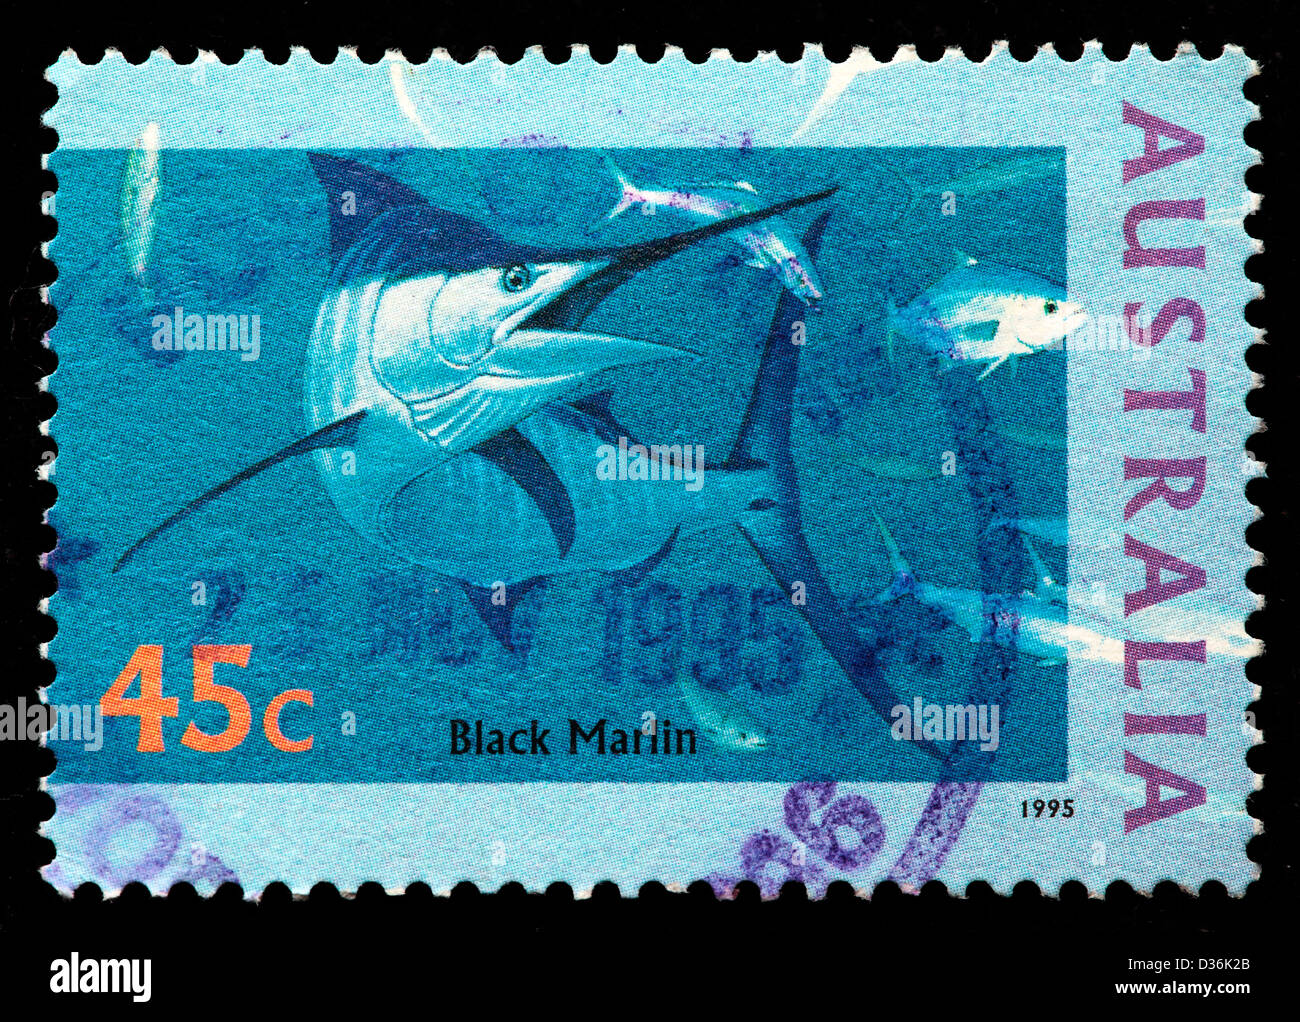 Black Marlin, postage stamp, Australia, 1995 Stock Photo